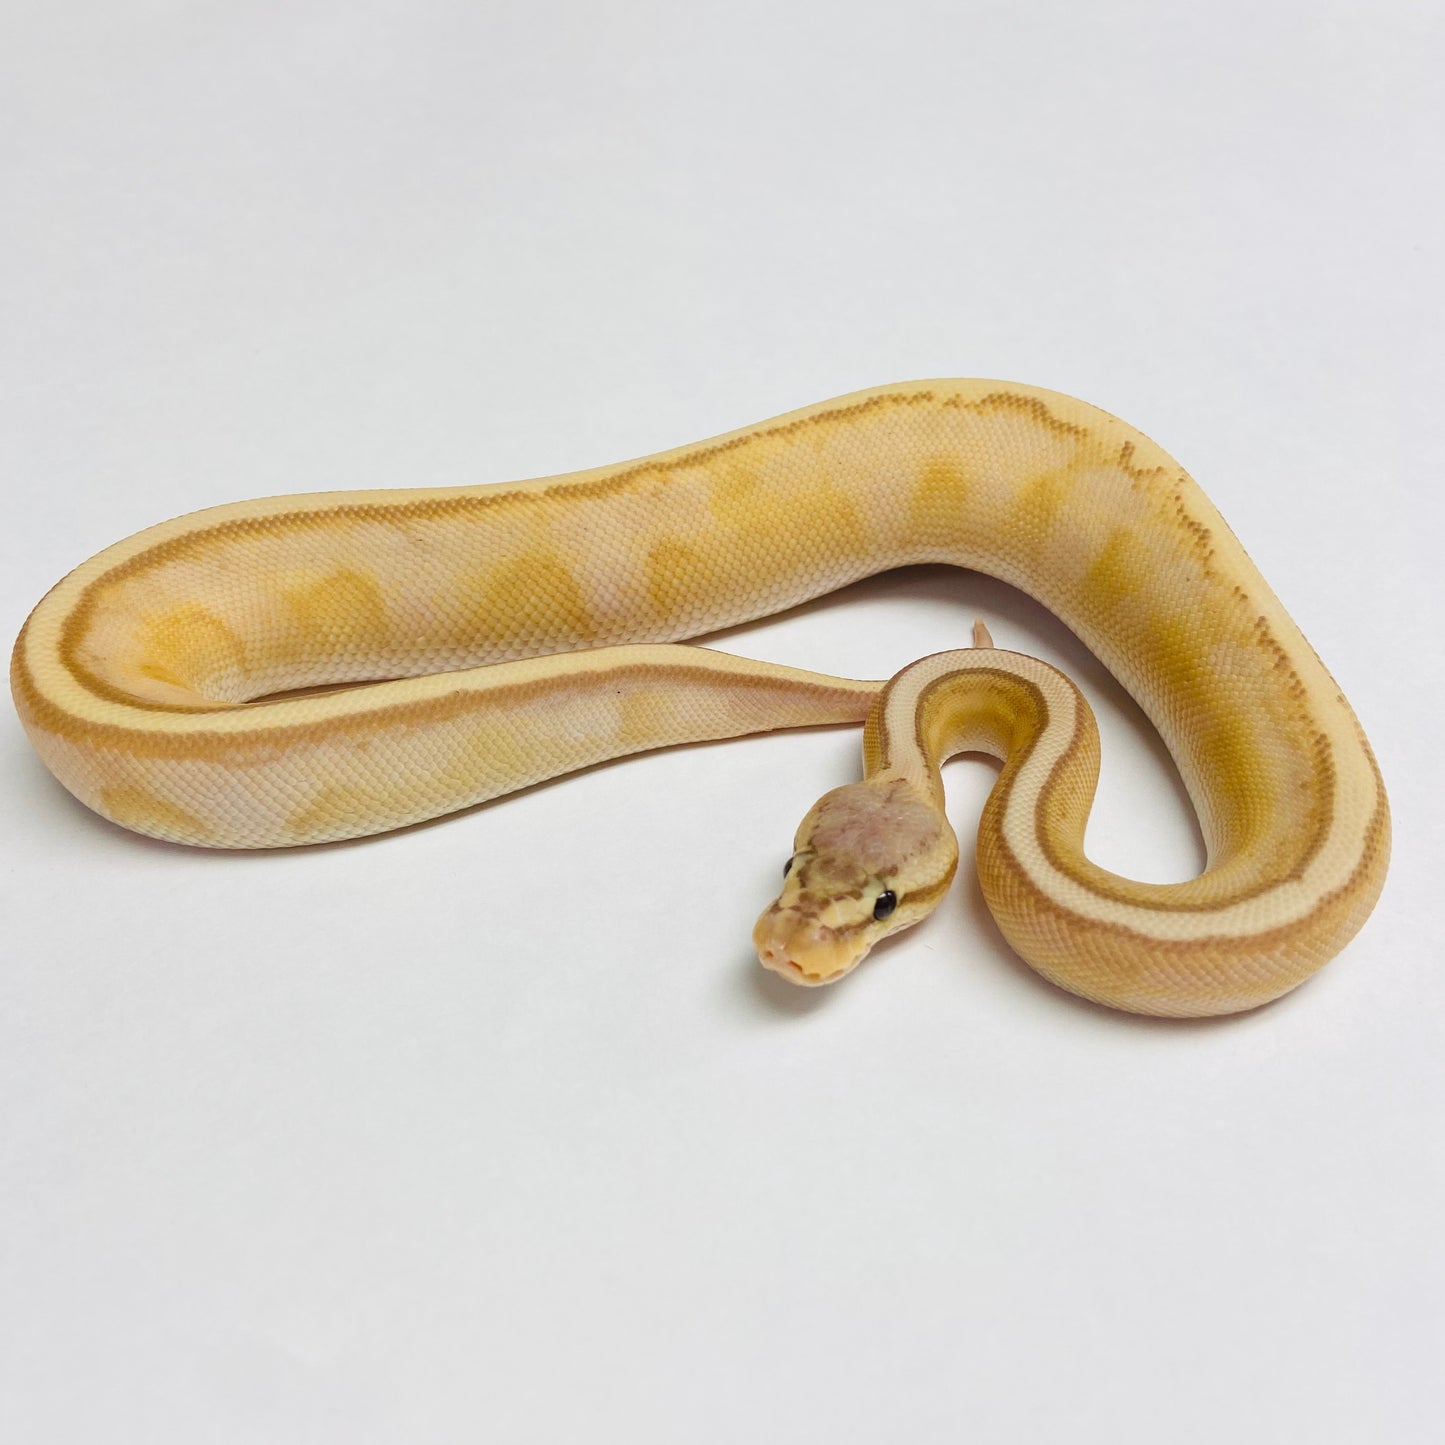 Banana Pastel Genetic Stripe Ball Python - Male #2023M04